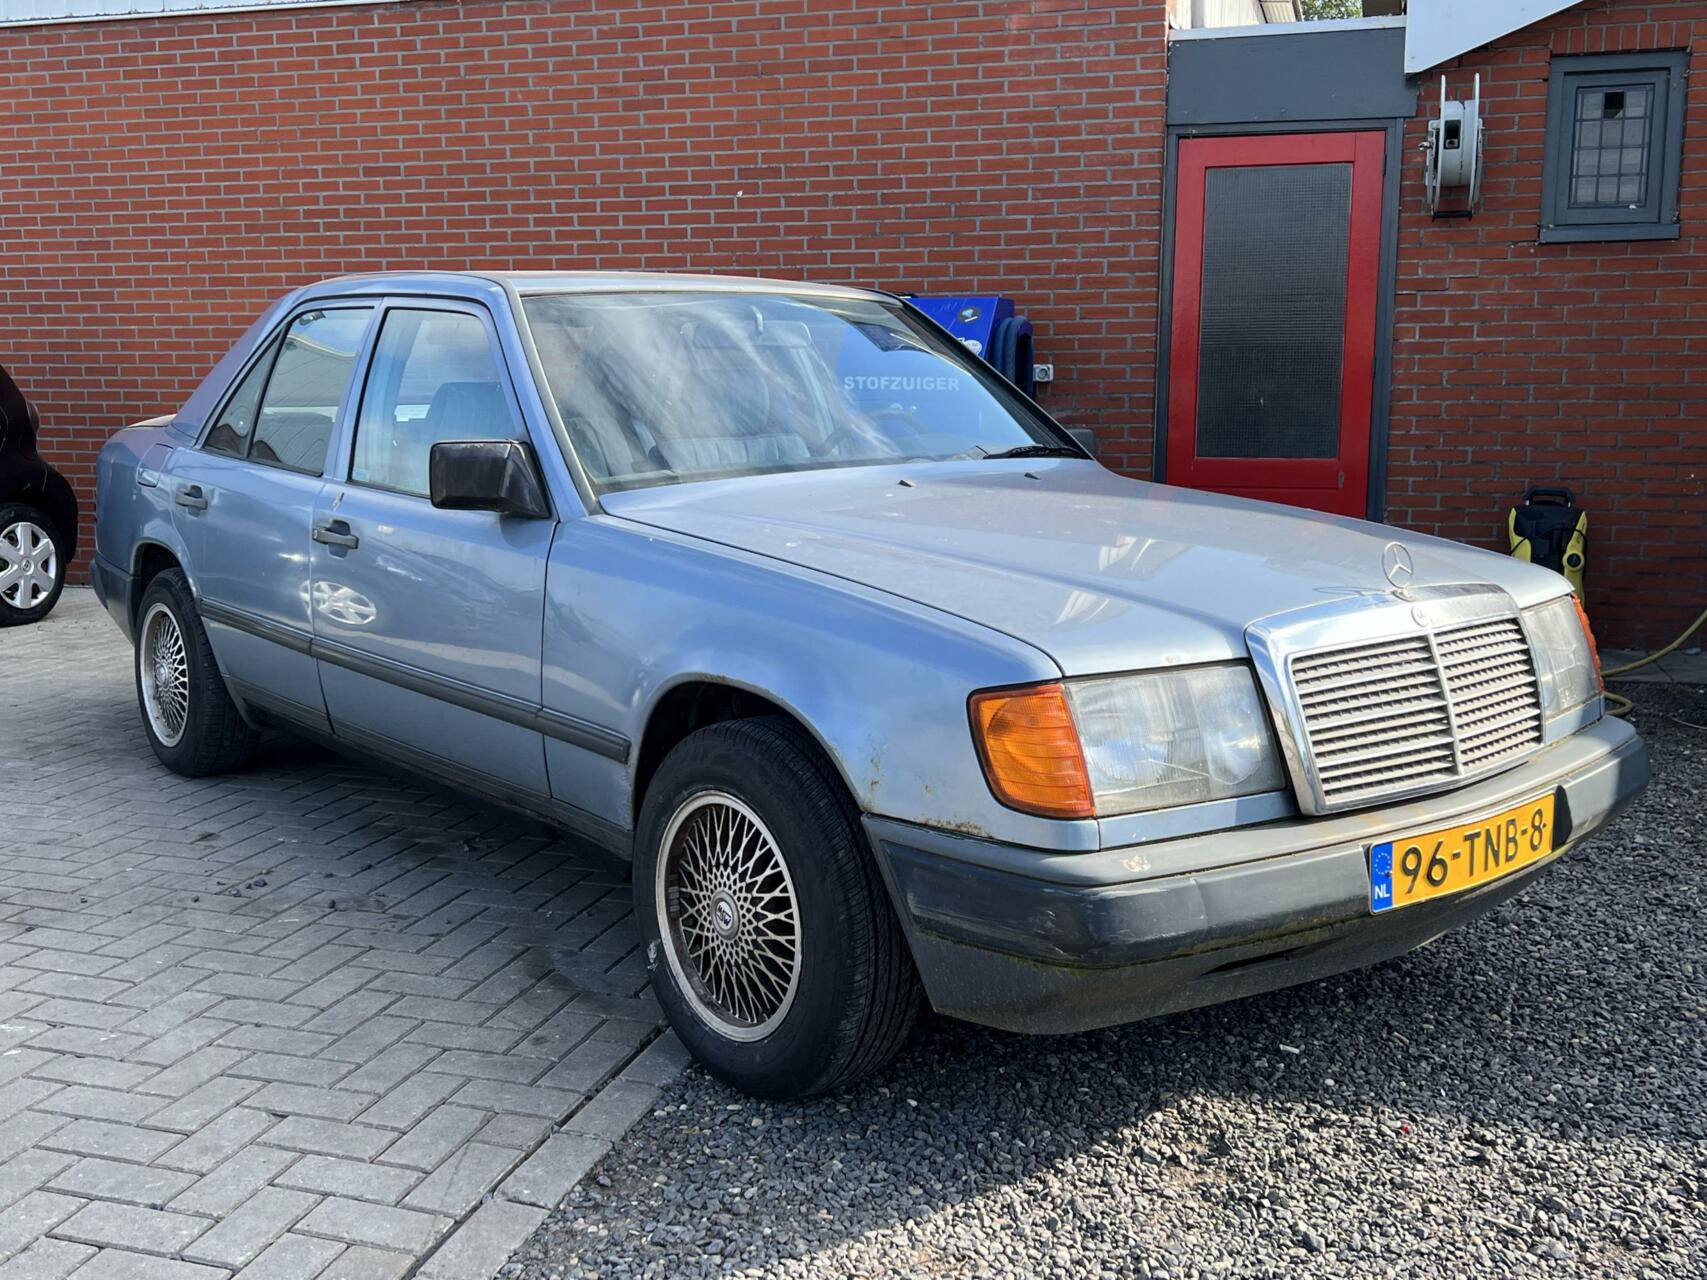 Caroutlet Groningen - Mercedes 200-500 260 E  | SCHUIFDAK | NIEUWE APK